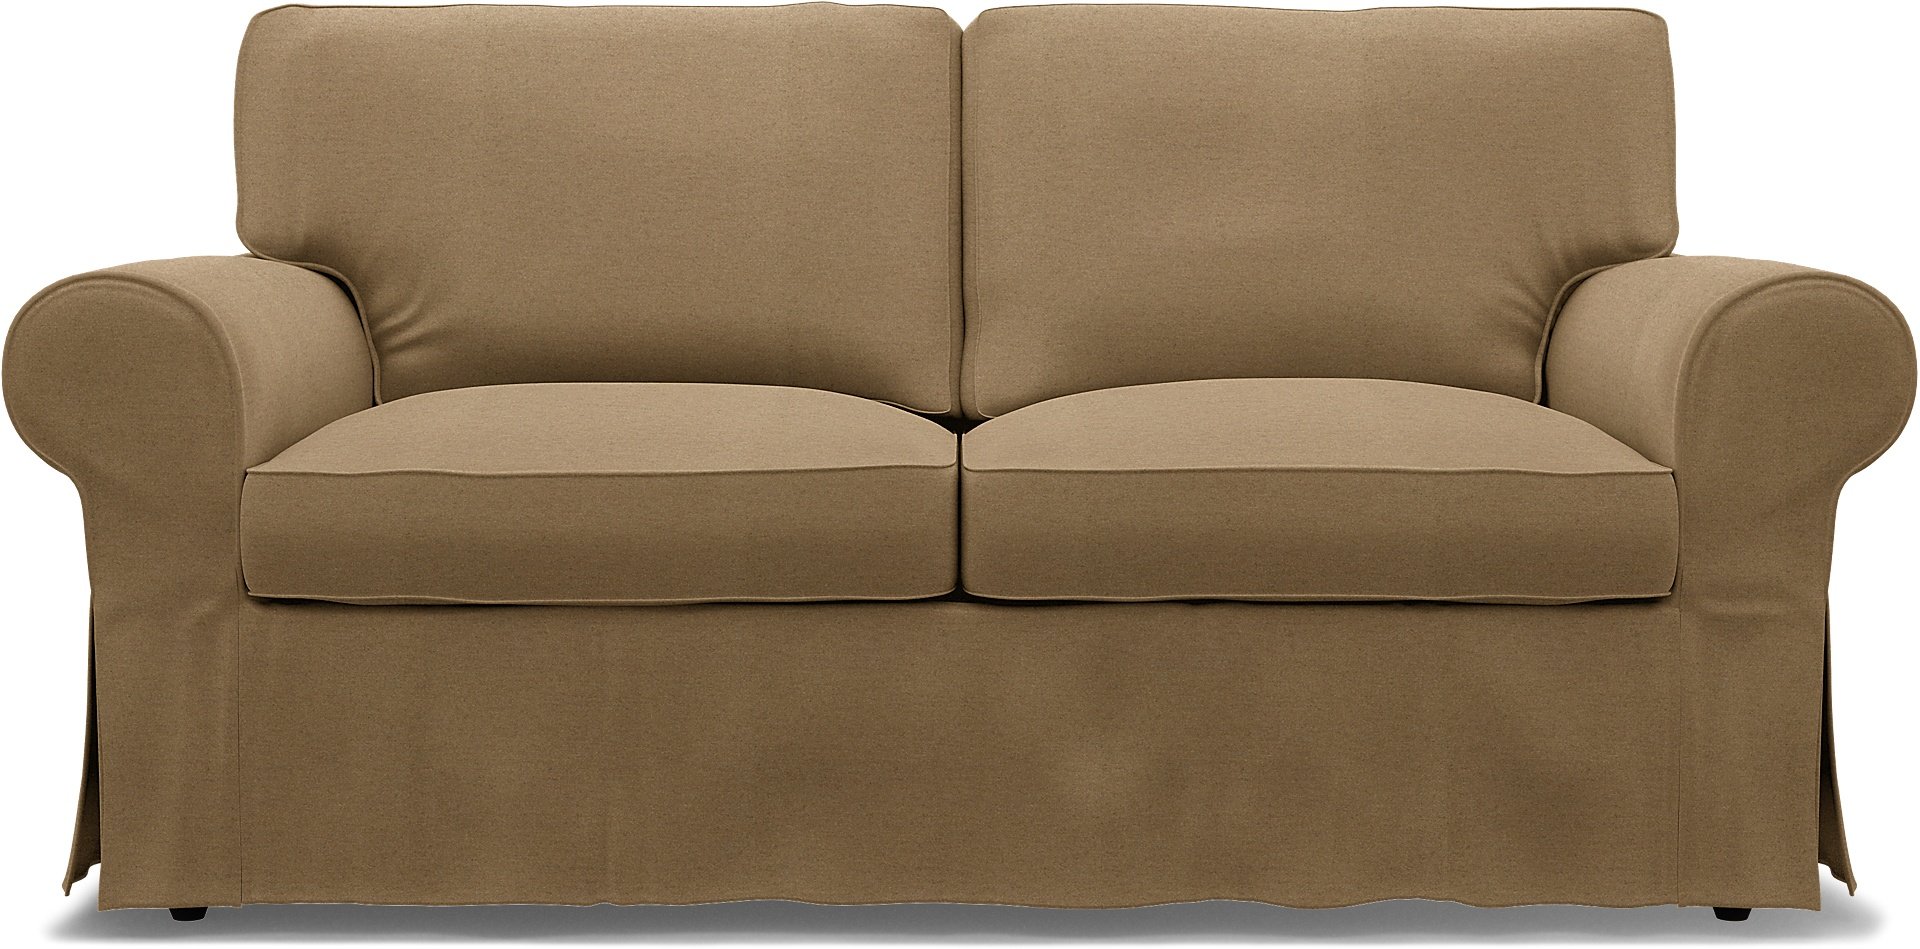 IKEA - Ektorp 2 Seater Sofa Bed Cover, Sand, Wool - Bemz